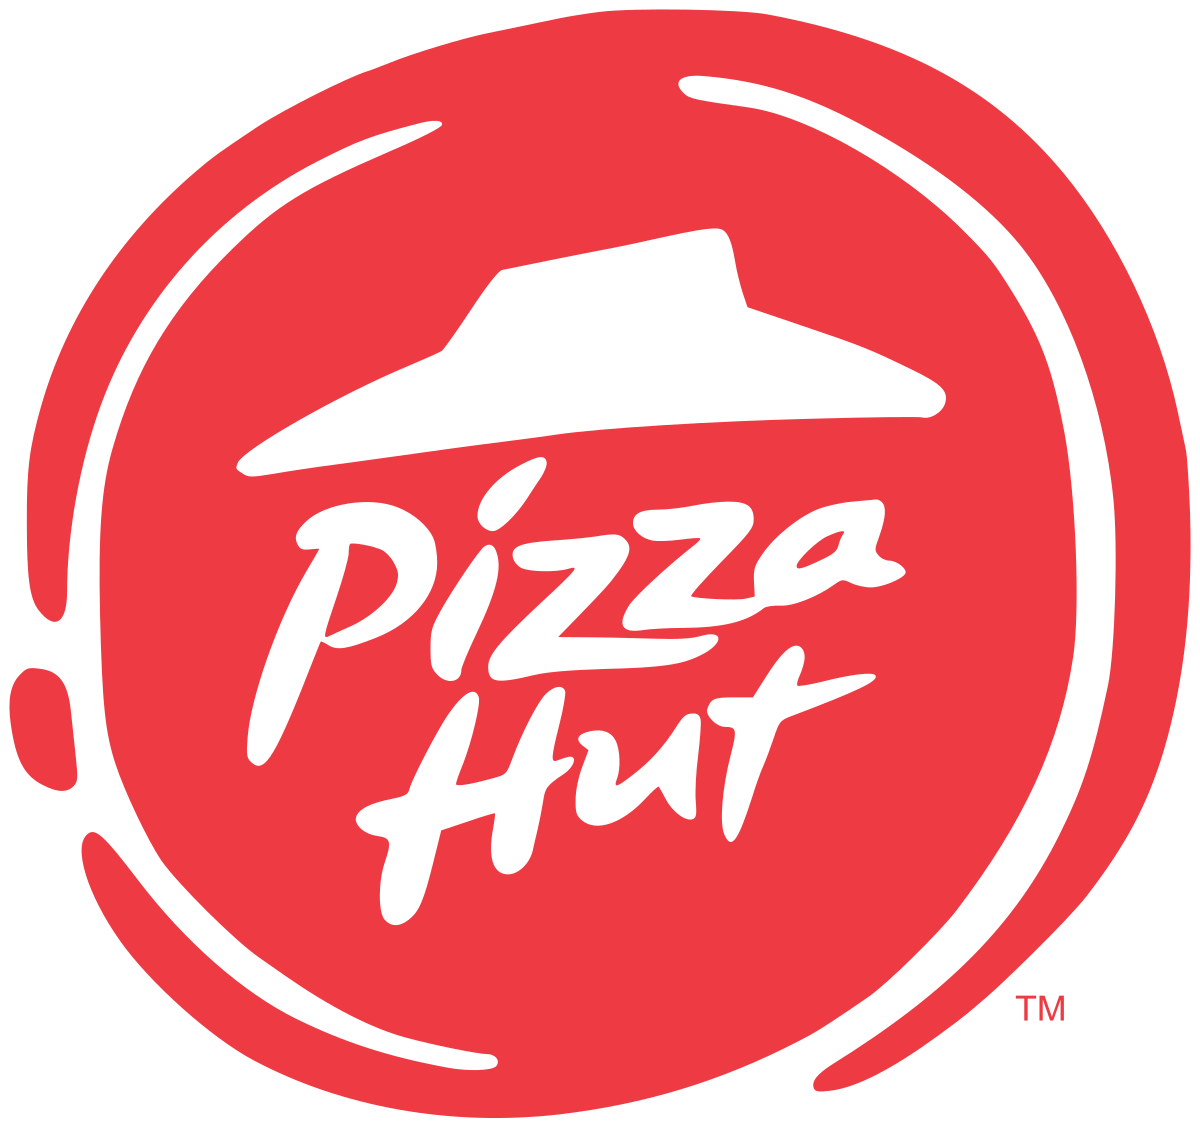 pizza hut mission statemen